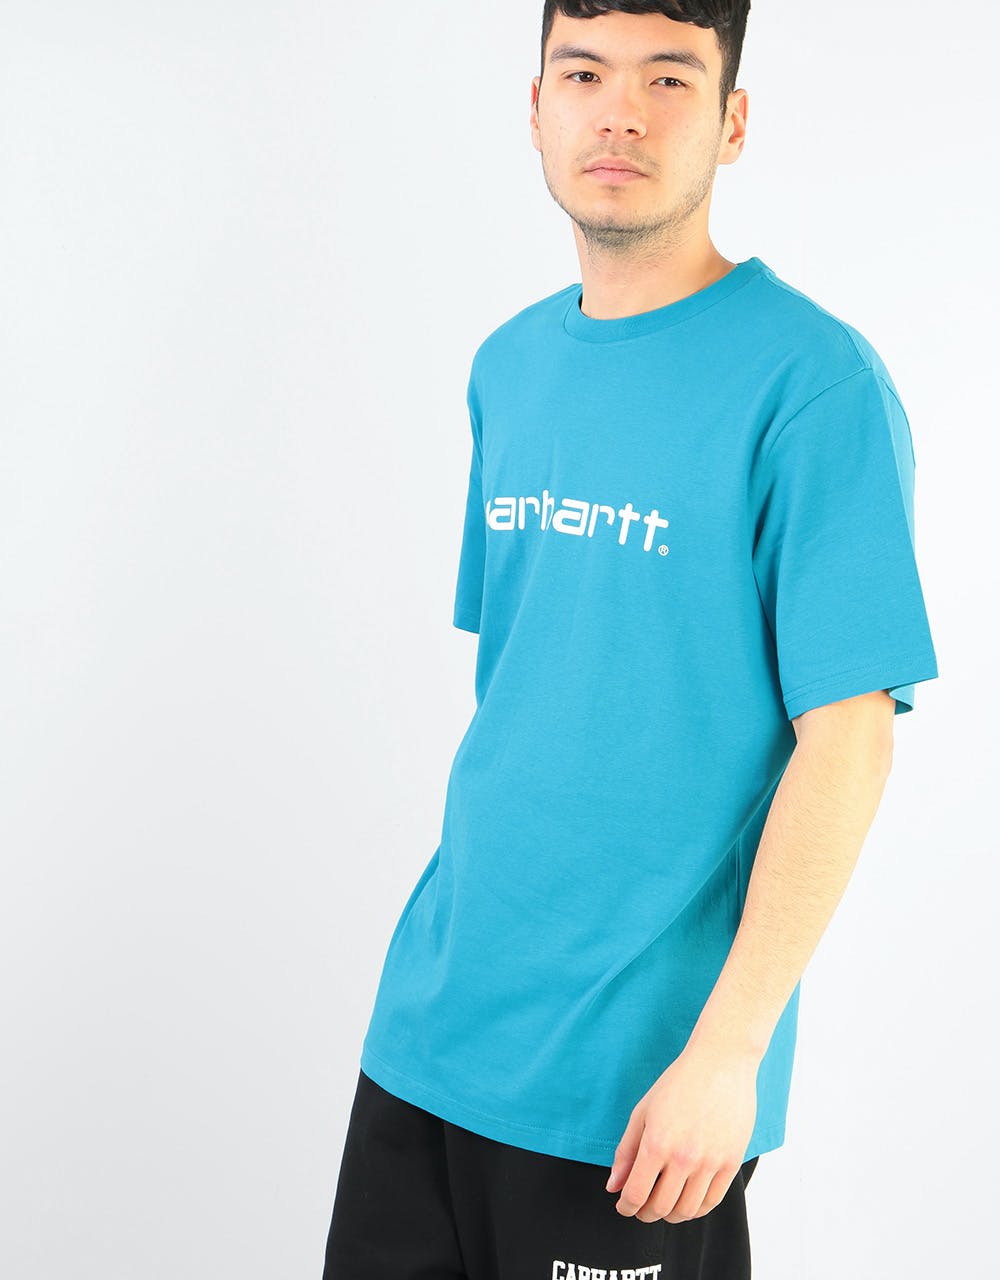 Carhartt WIP S/S Script T-Shirt - Pizol/White